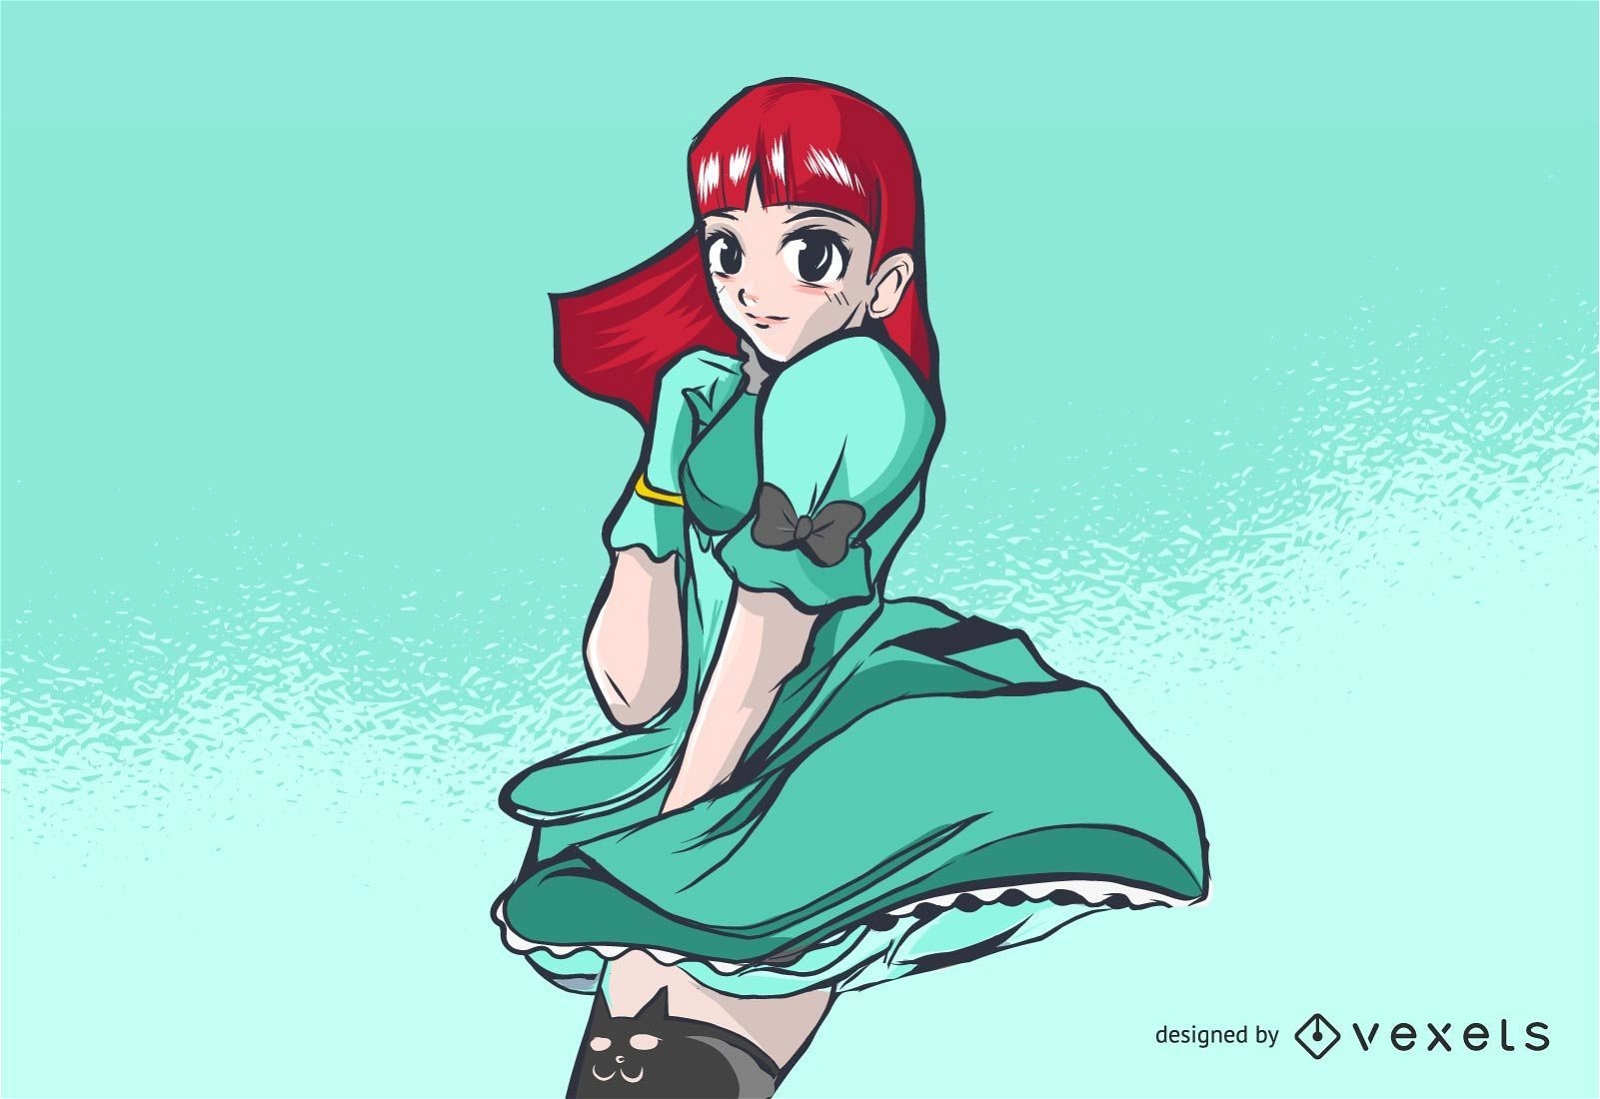 Niedlich aussehender Anime Girl Charakter